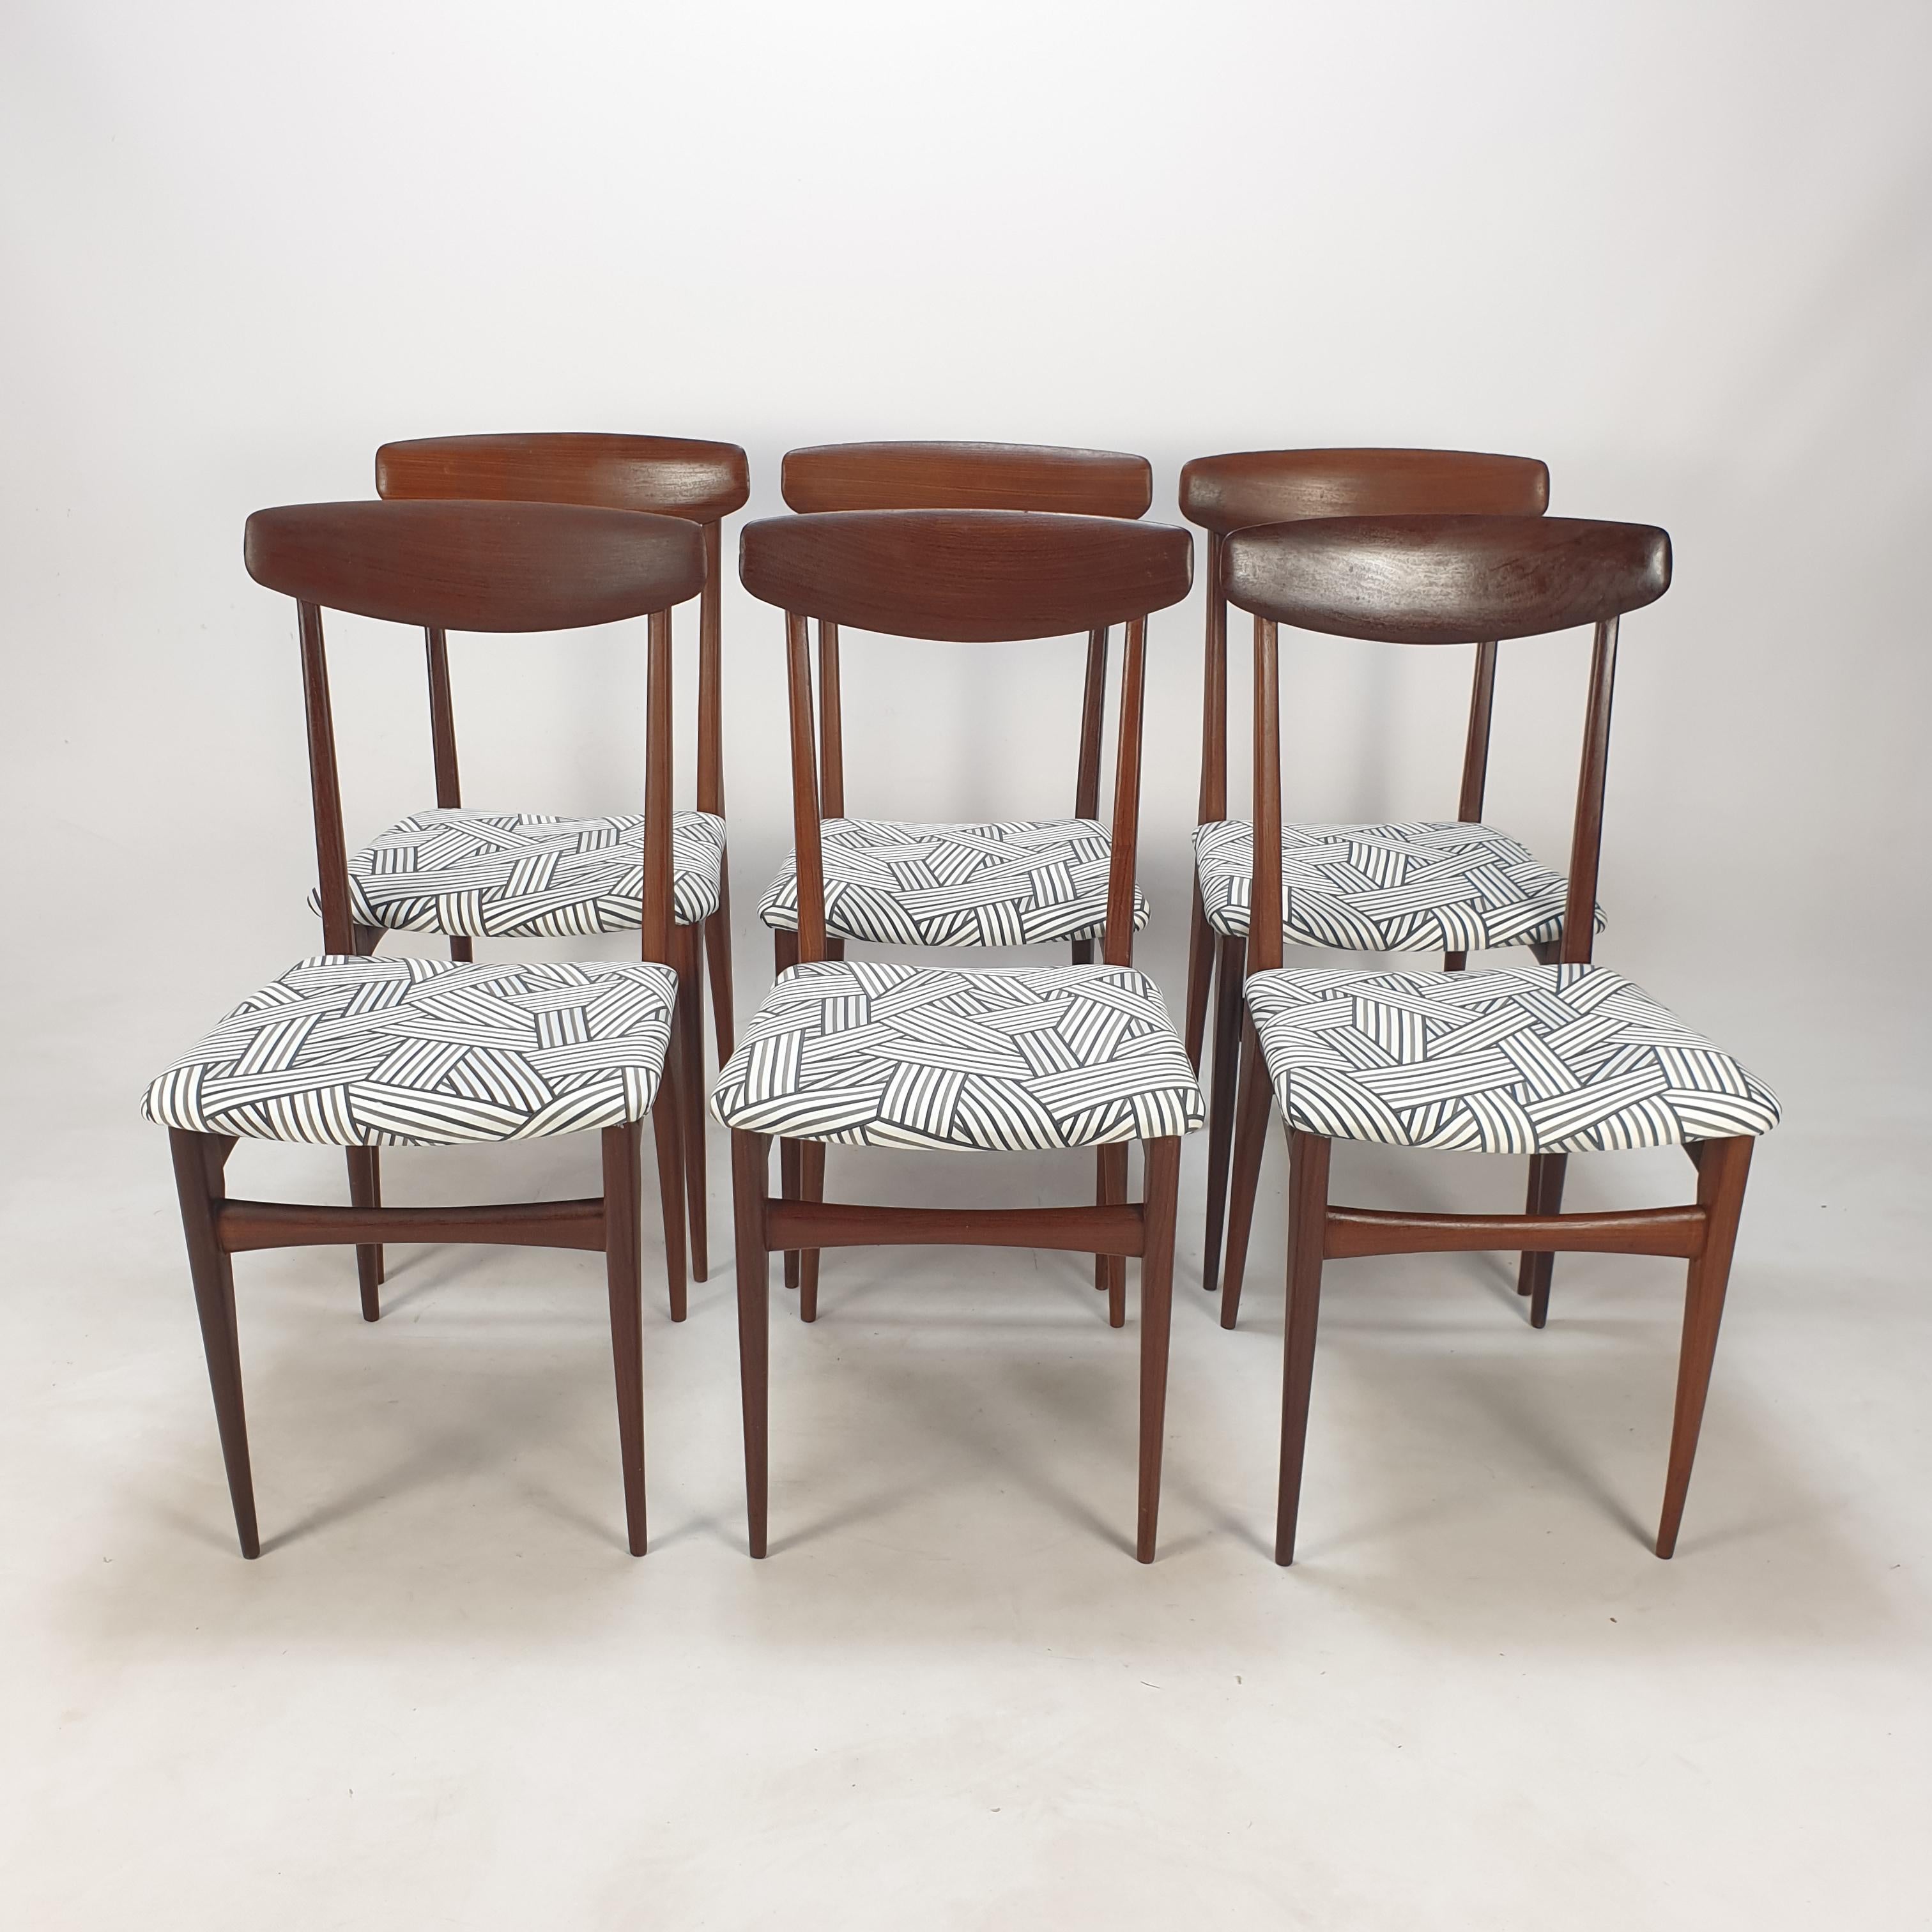 Set of 6 Mid Century Italian Teak Dining Chairs, 1950s For Sale 4